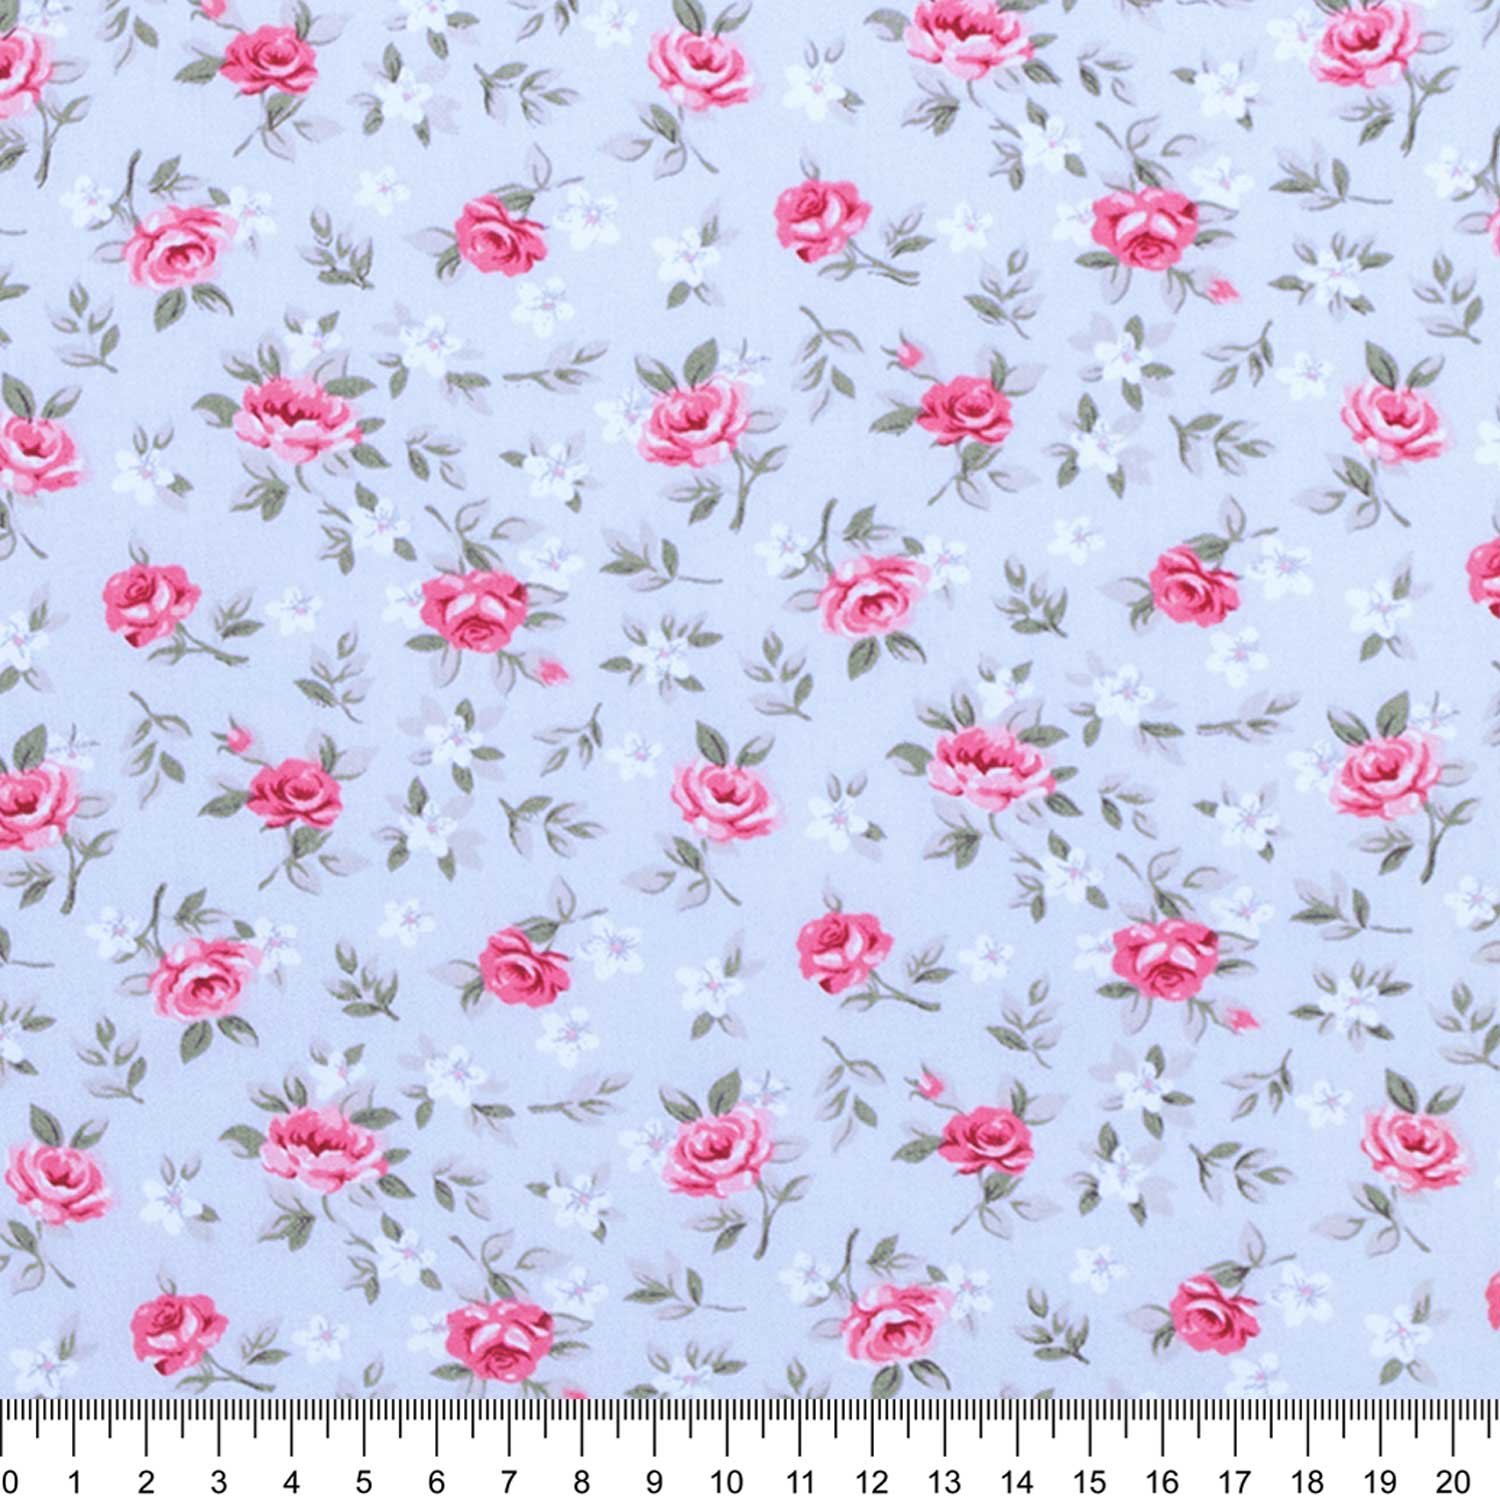 tecido-tricoline-estampado-floral-lucia-cinza-della-aviamentos-tecidos-caldeira-curto-5298